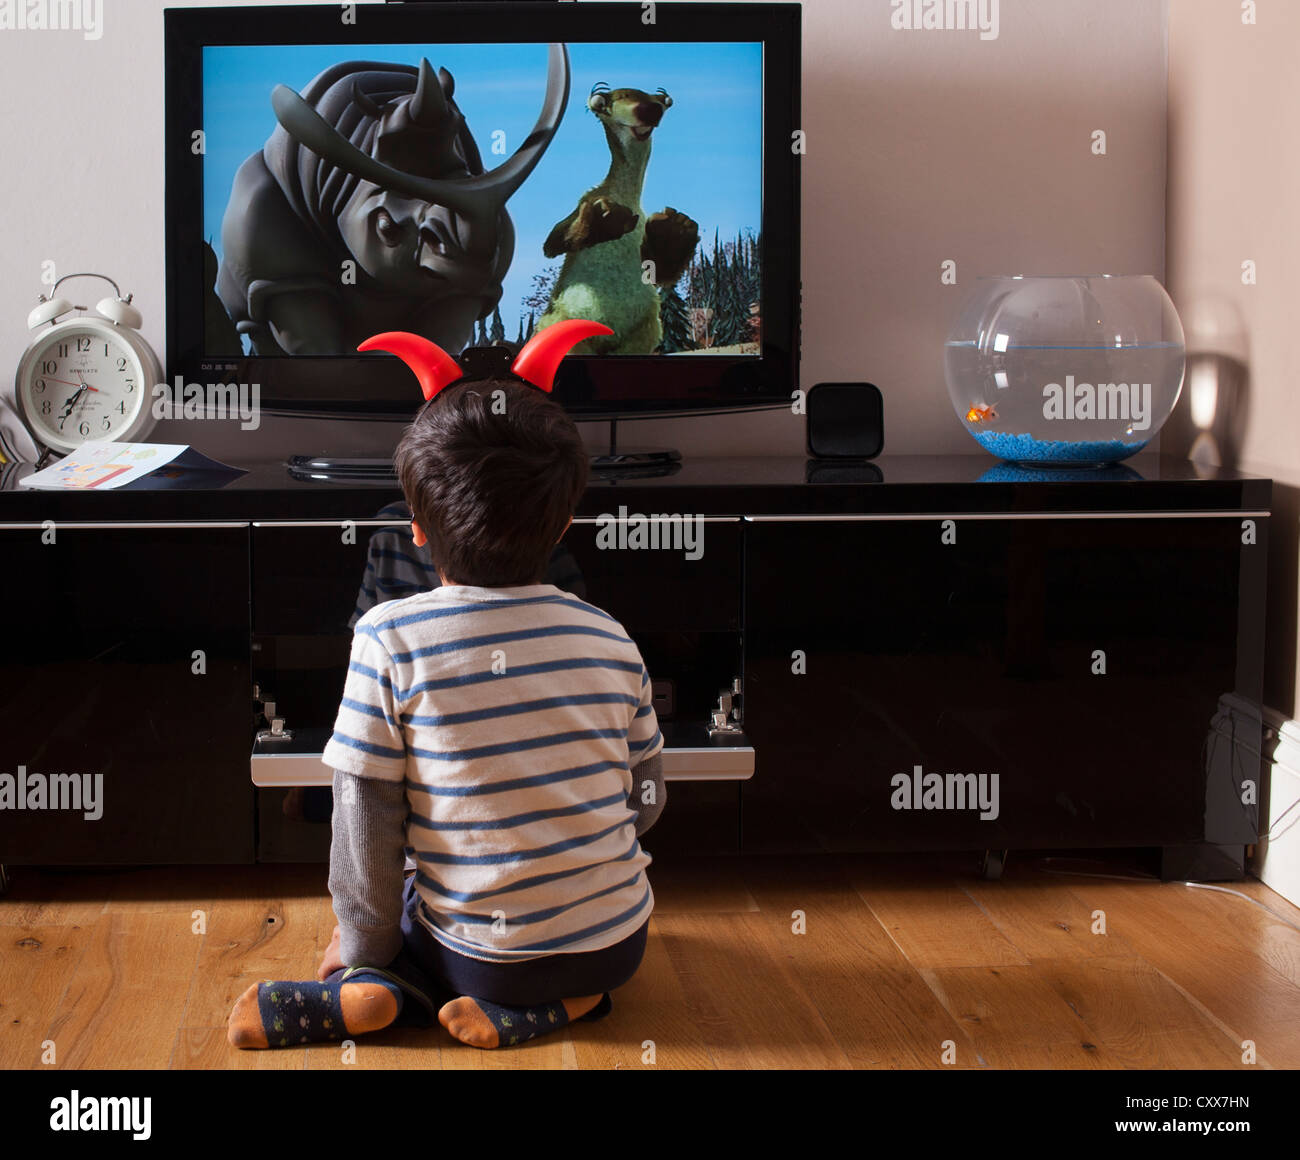 Child watches TV Stock Photo